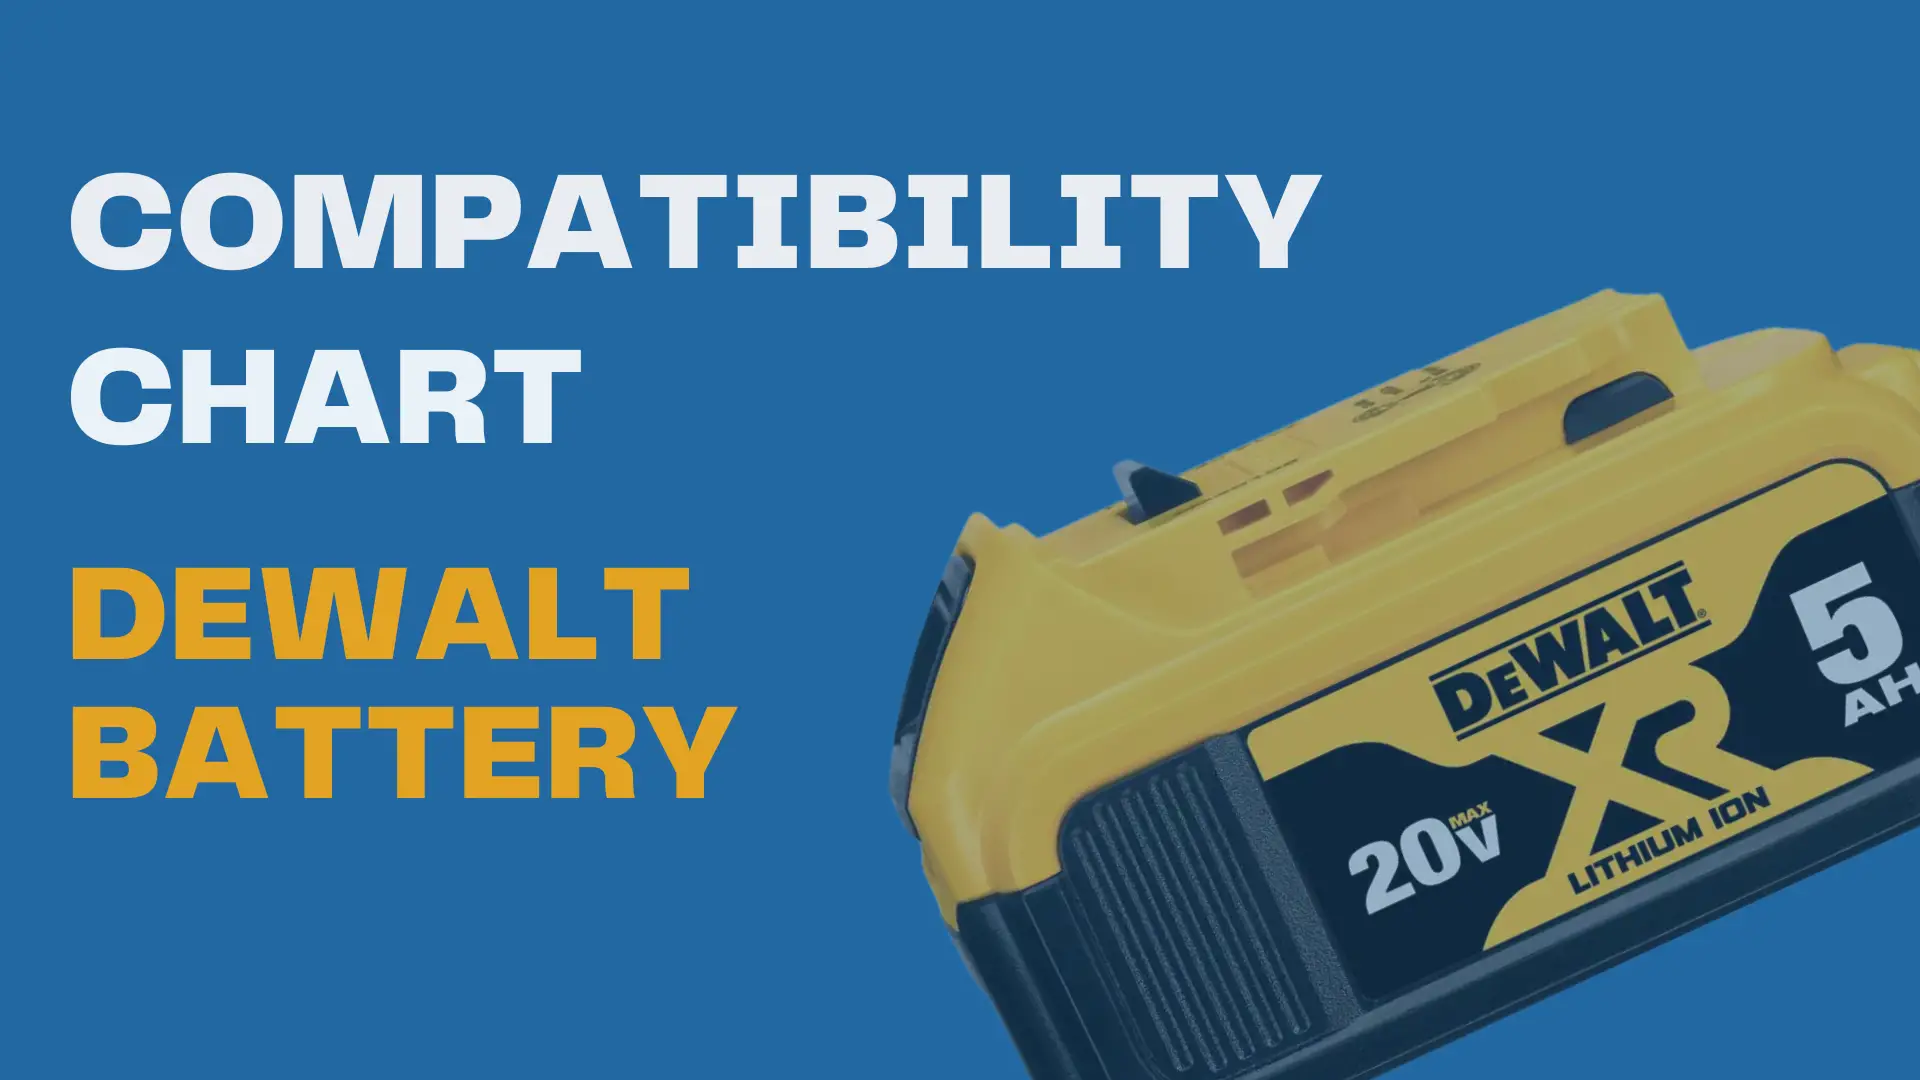 dewalt battery compatibility chart